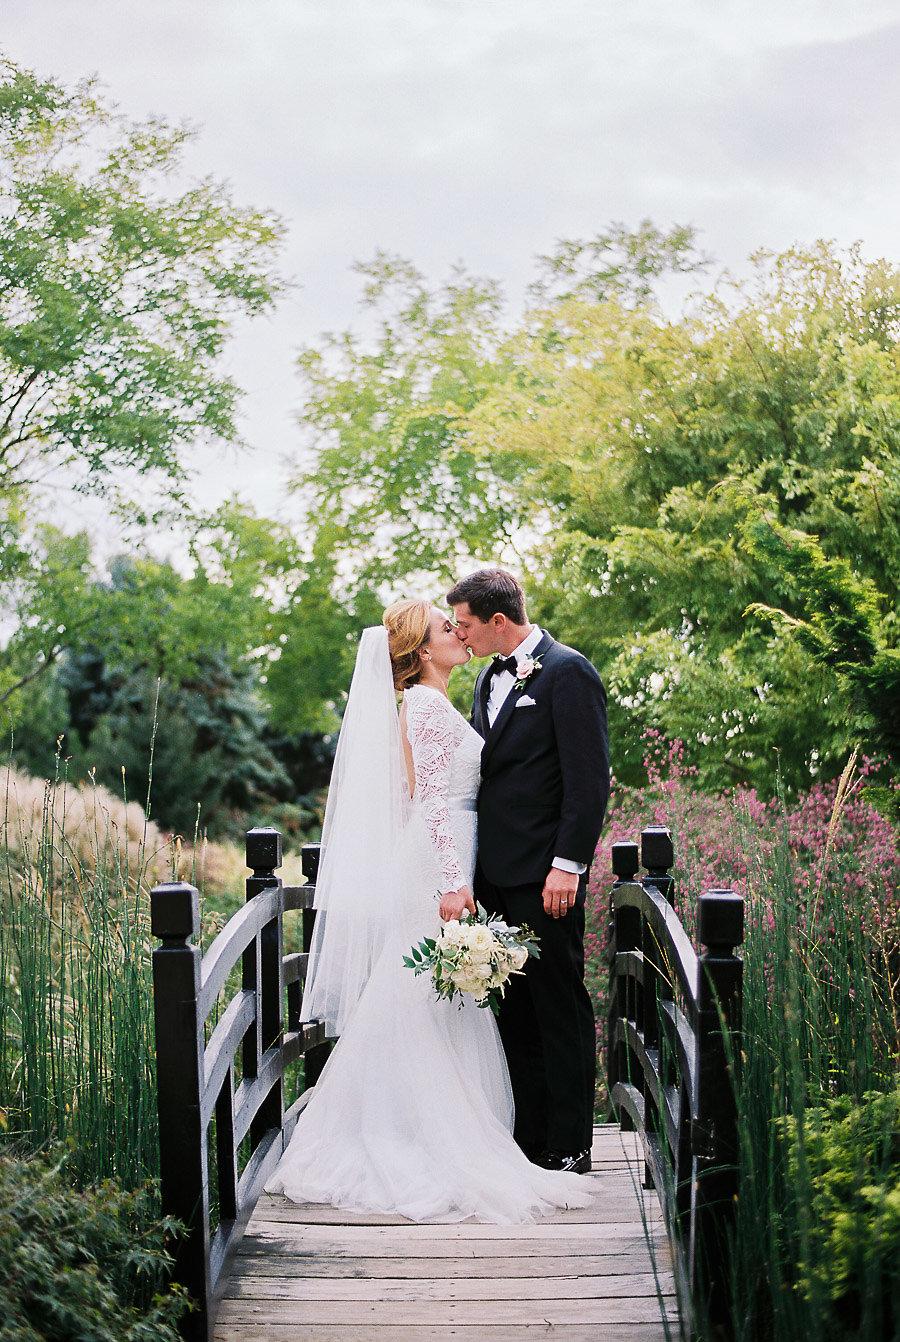 European Inspired Garden Wedding At Paxson Hill Farm Du Soleil Photographie Philly In Love Philadelphia Weddings Blog Venues Vendors